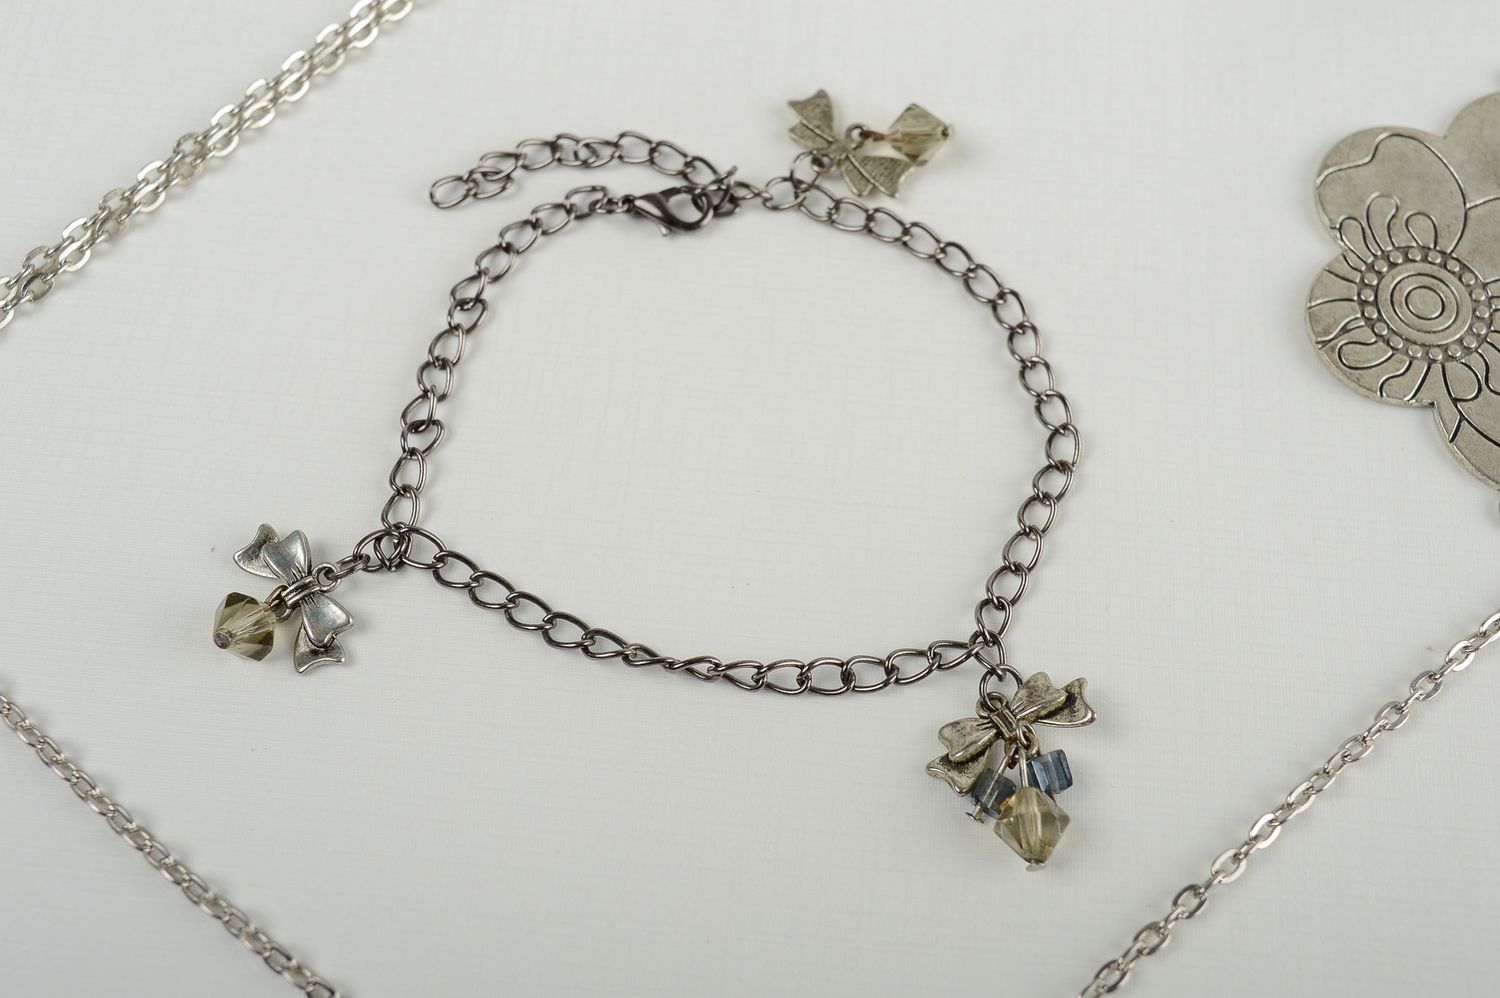 Unusual handmade metal bracelet chain bracelet with charms fashion trends photo 2